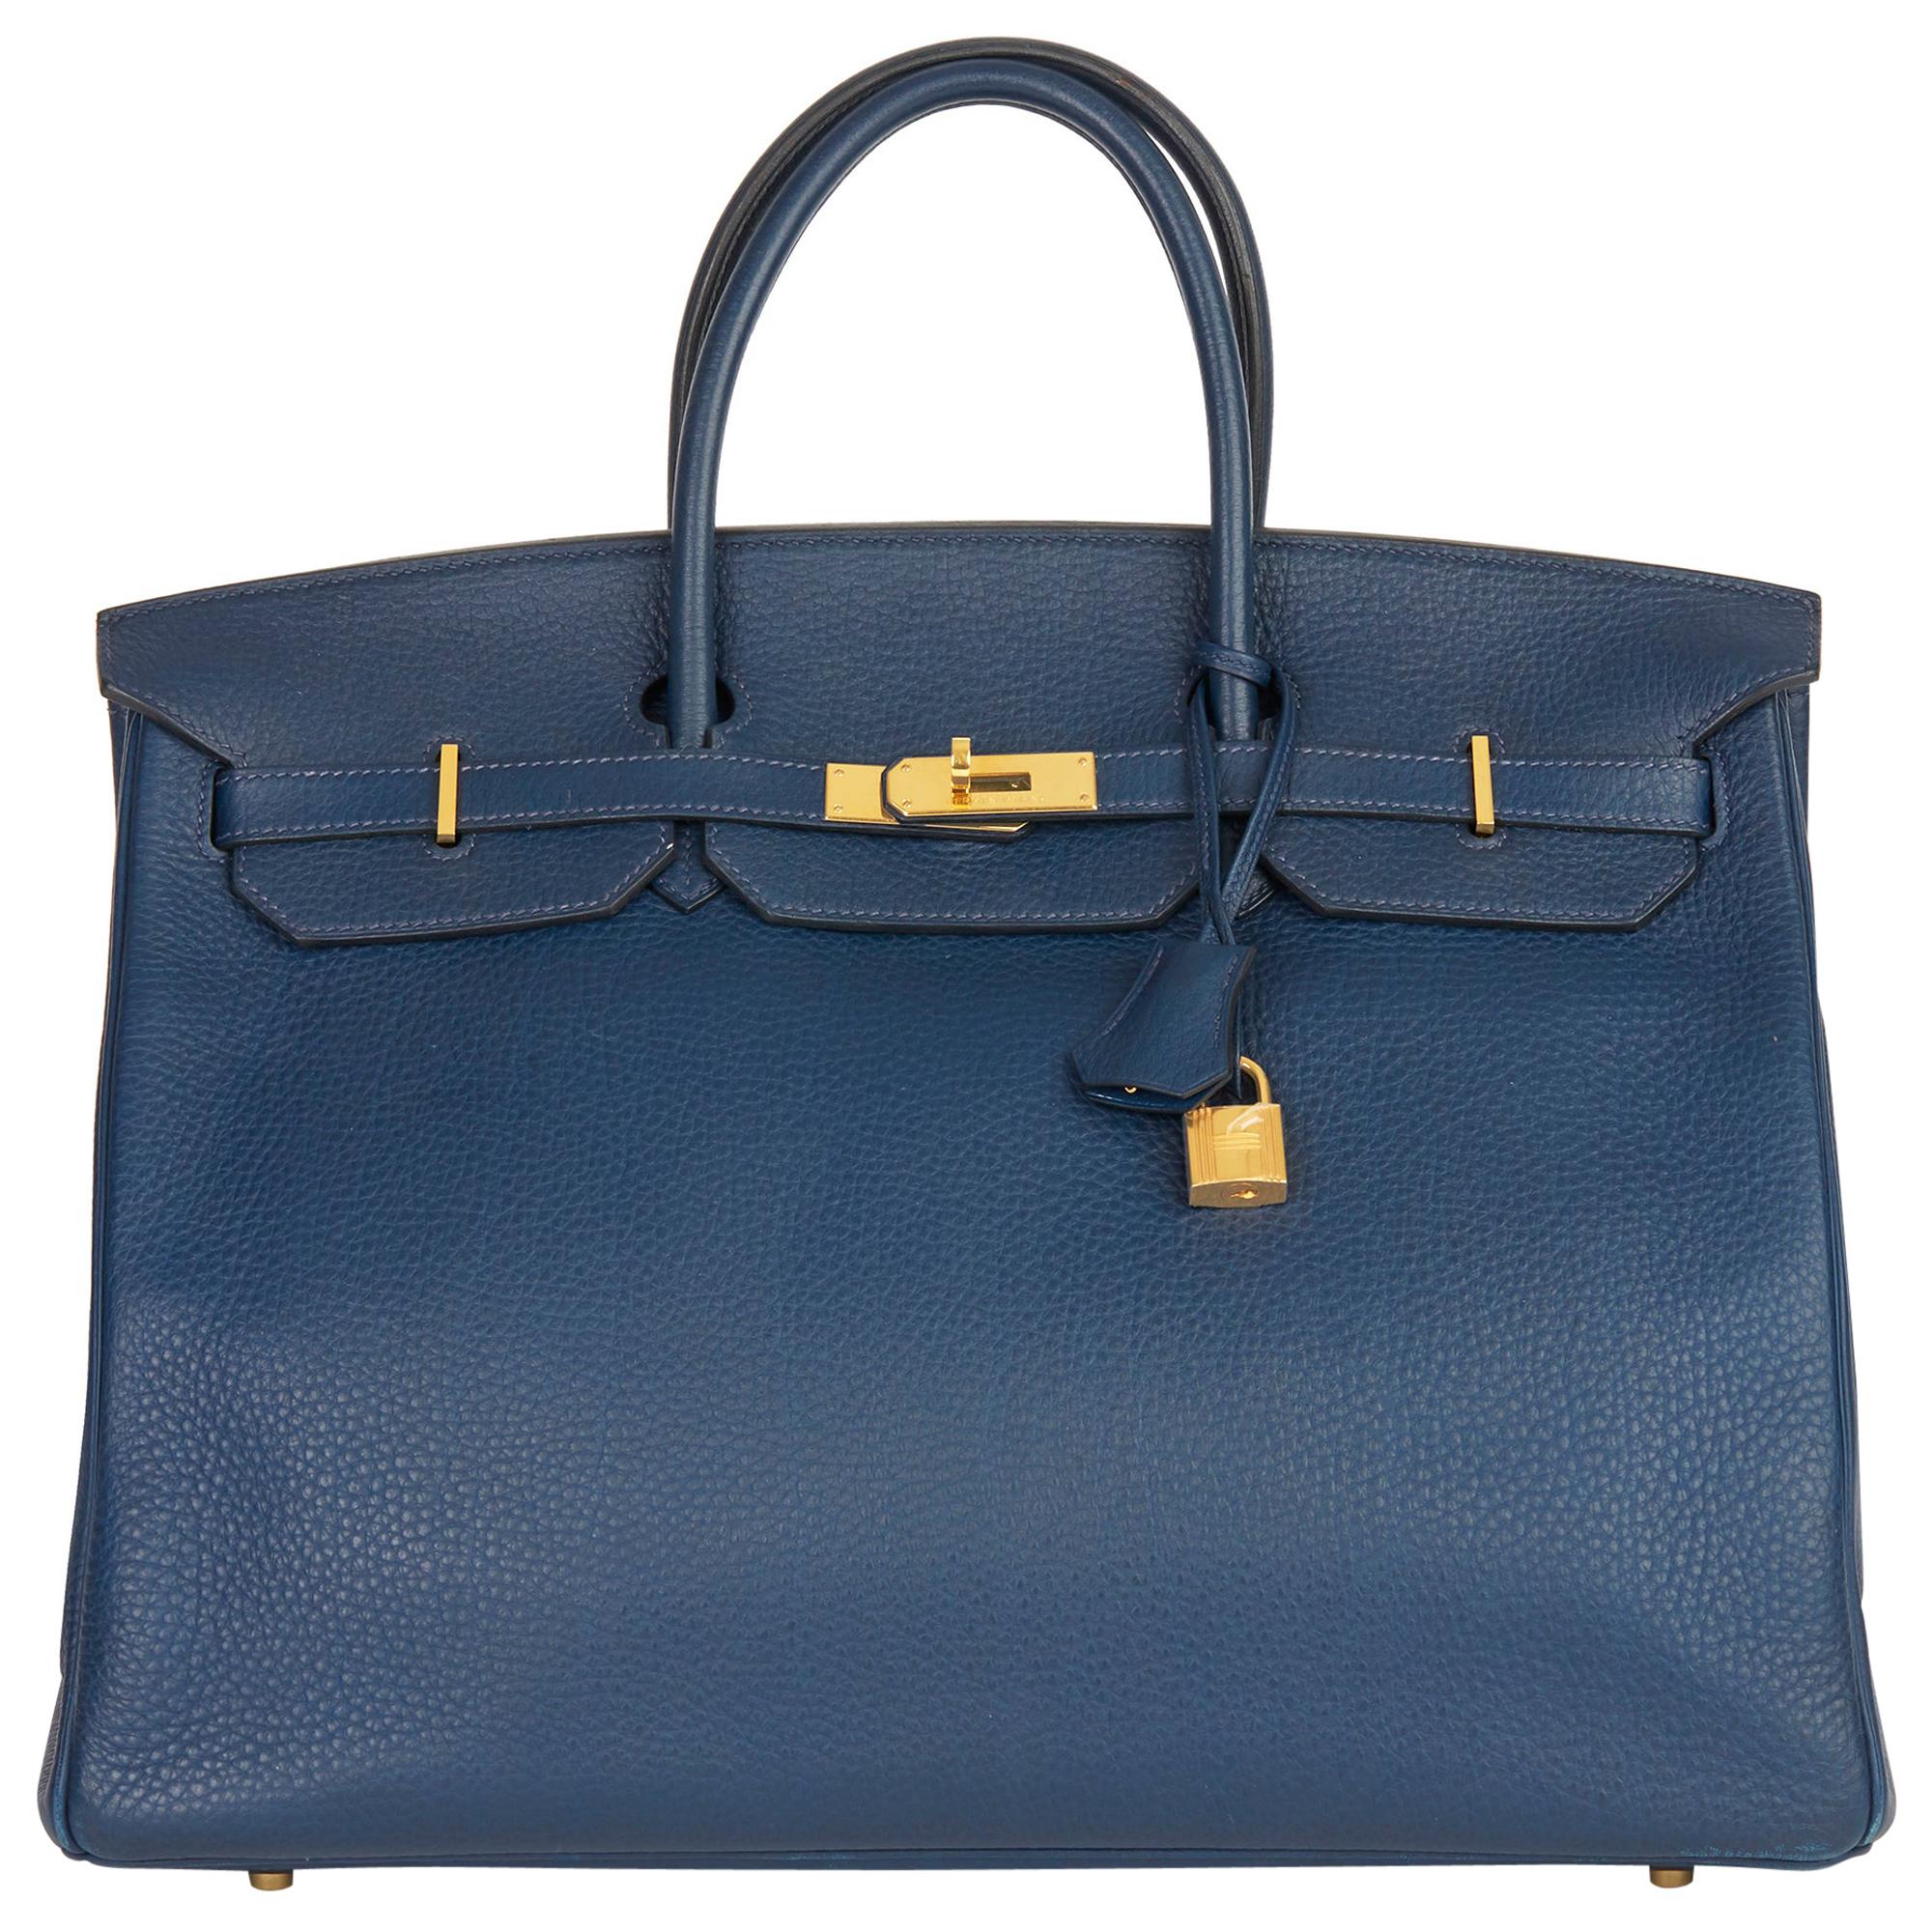 2010 Hermès Bleu de Malte Clemence Leather Birkin 40cm